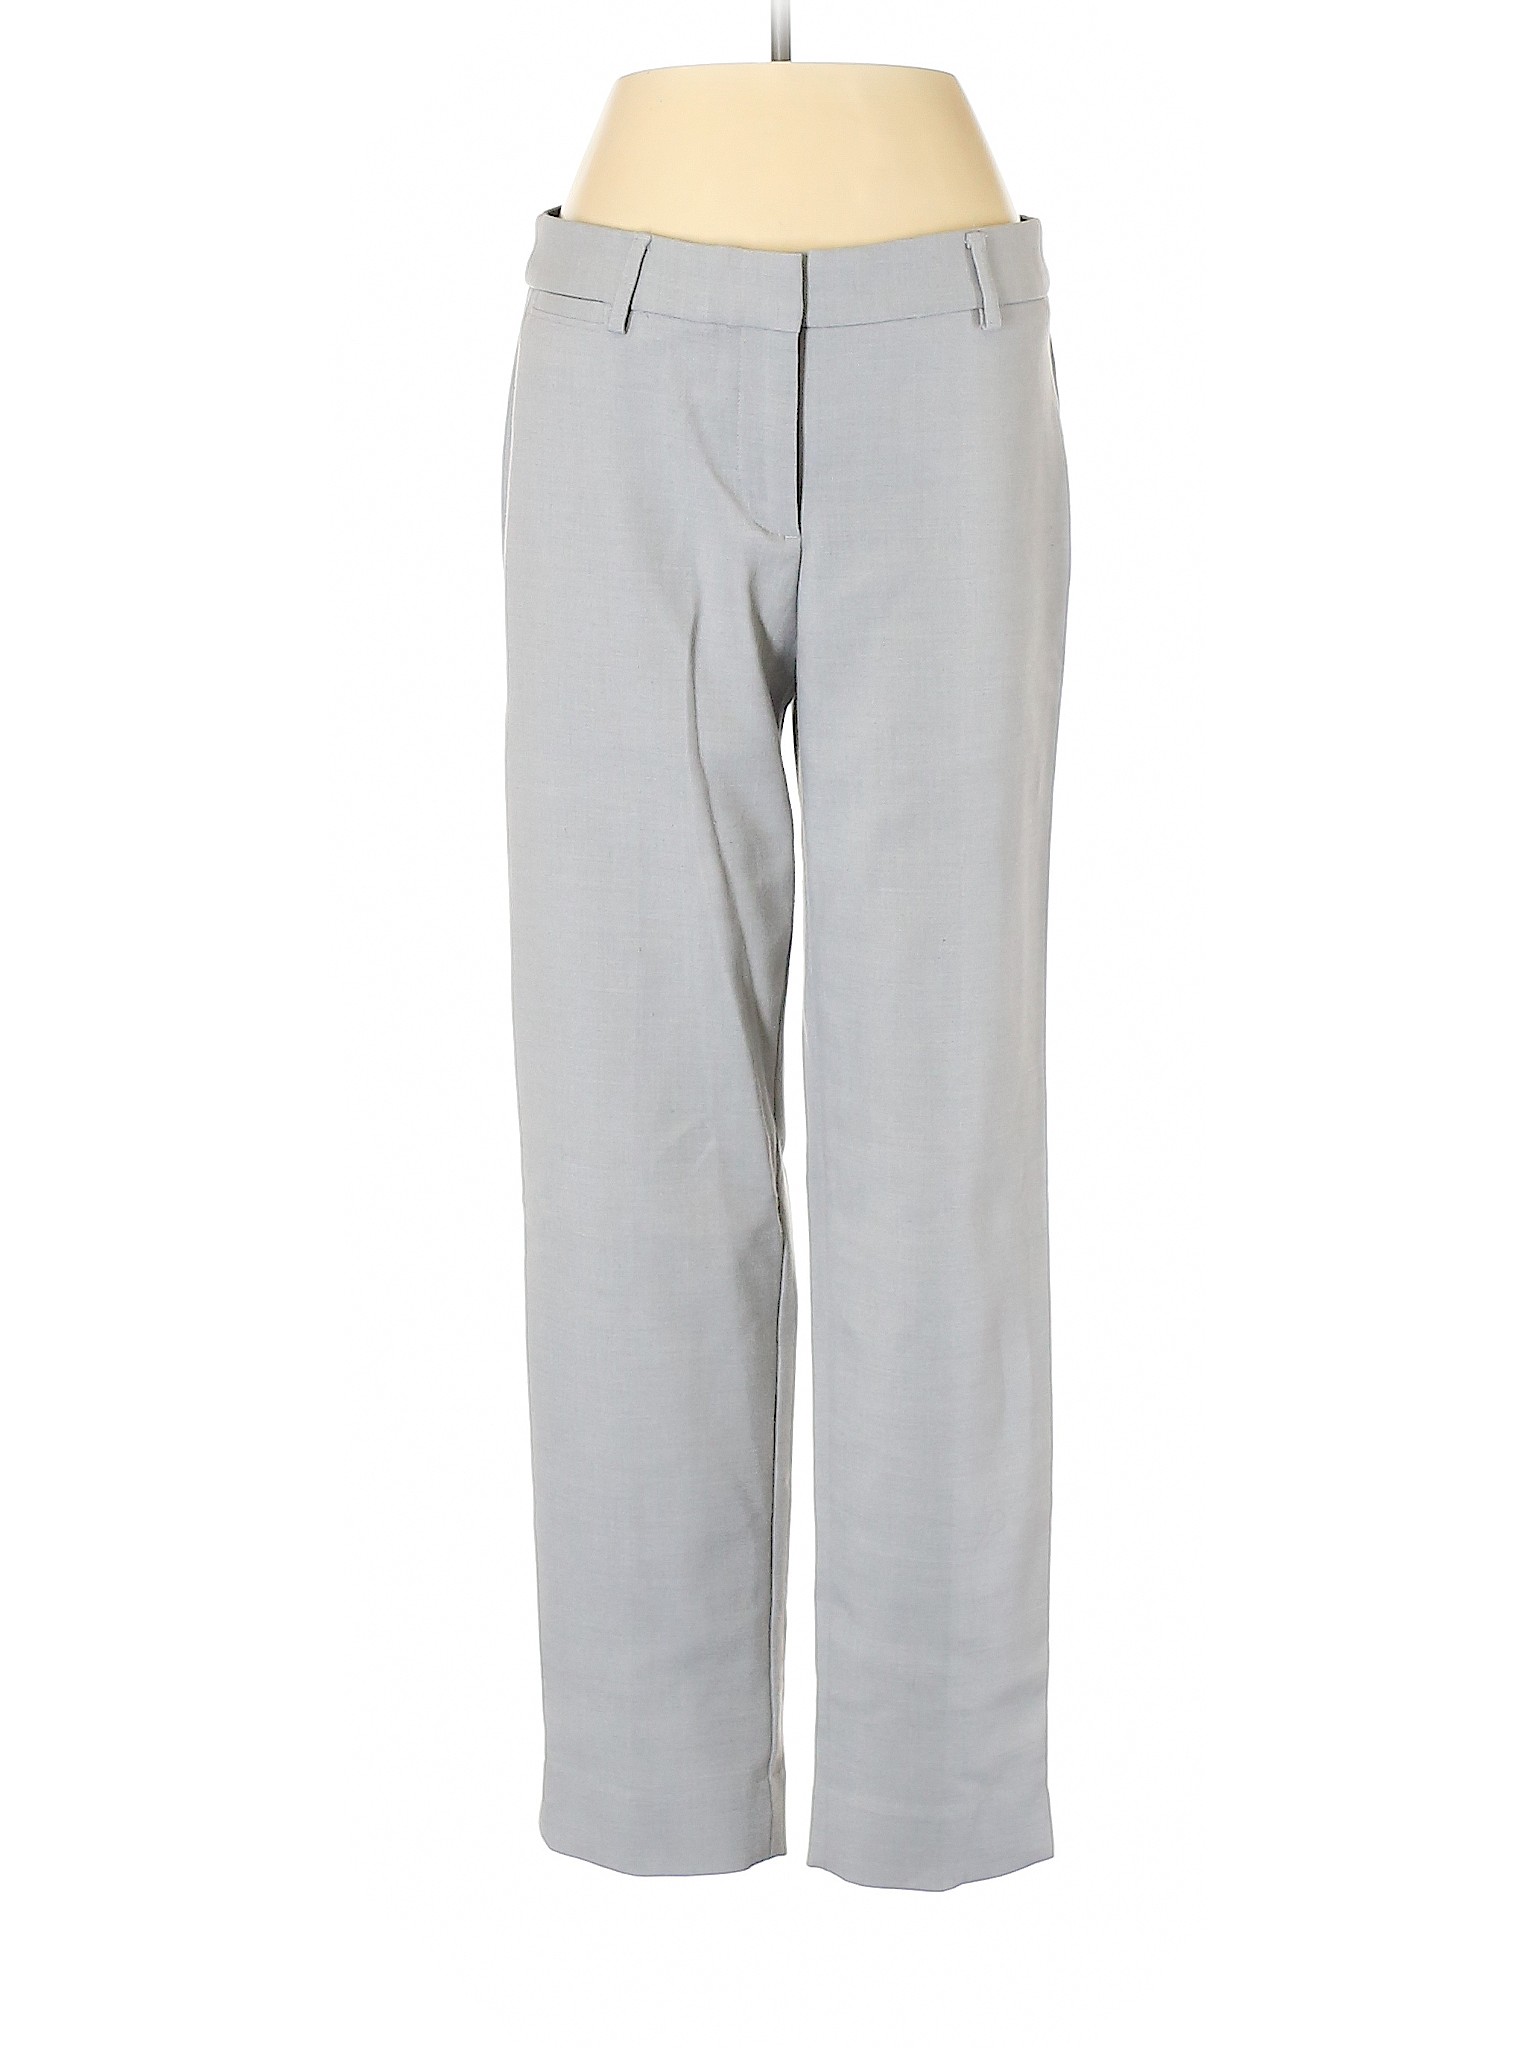 Talbots Women Gray Dress Pants 4 | eBay